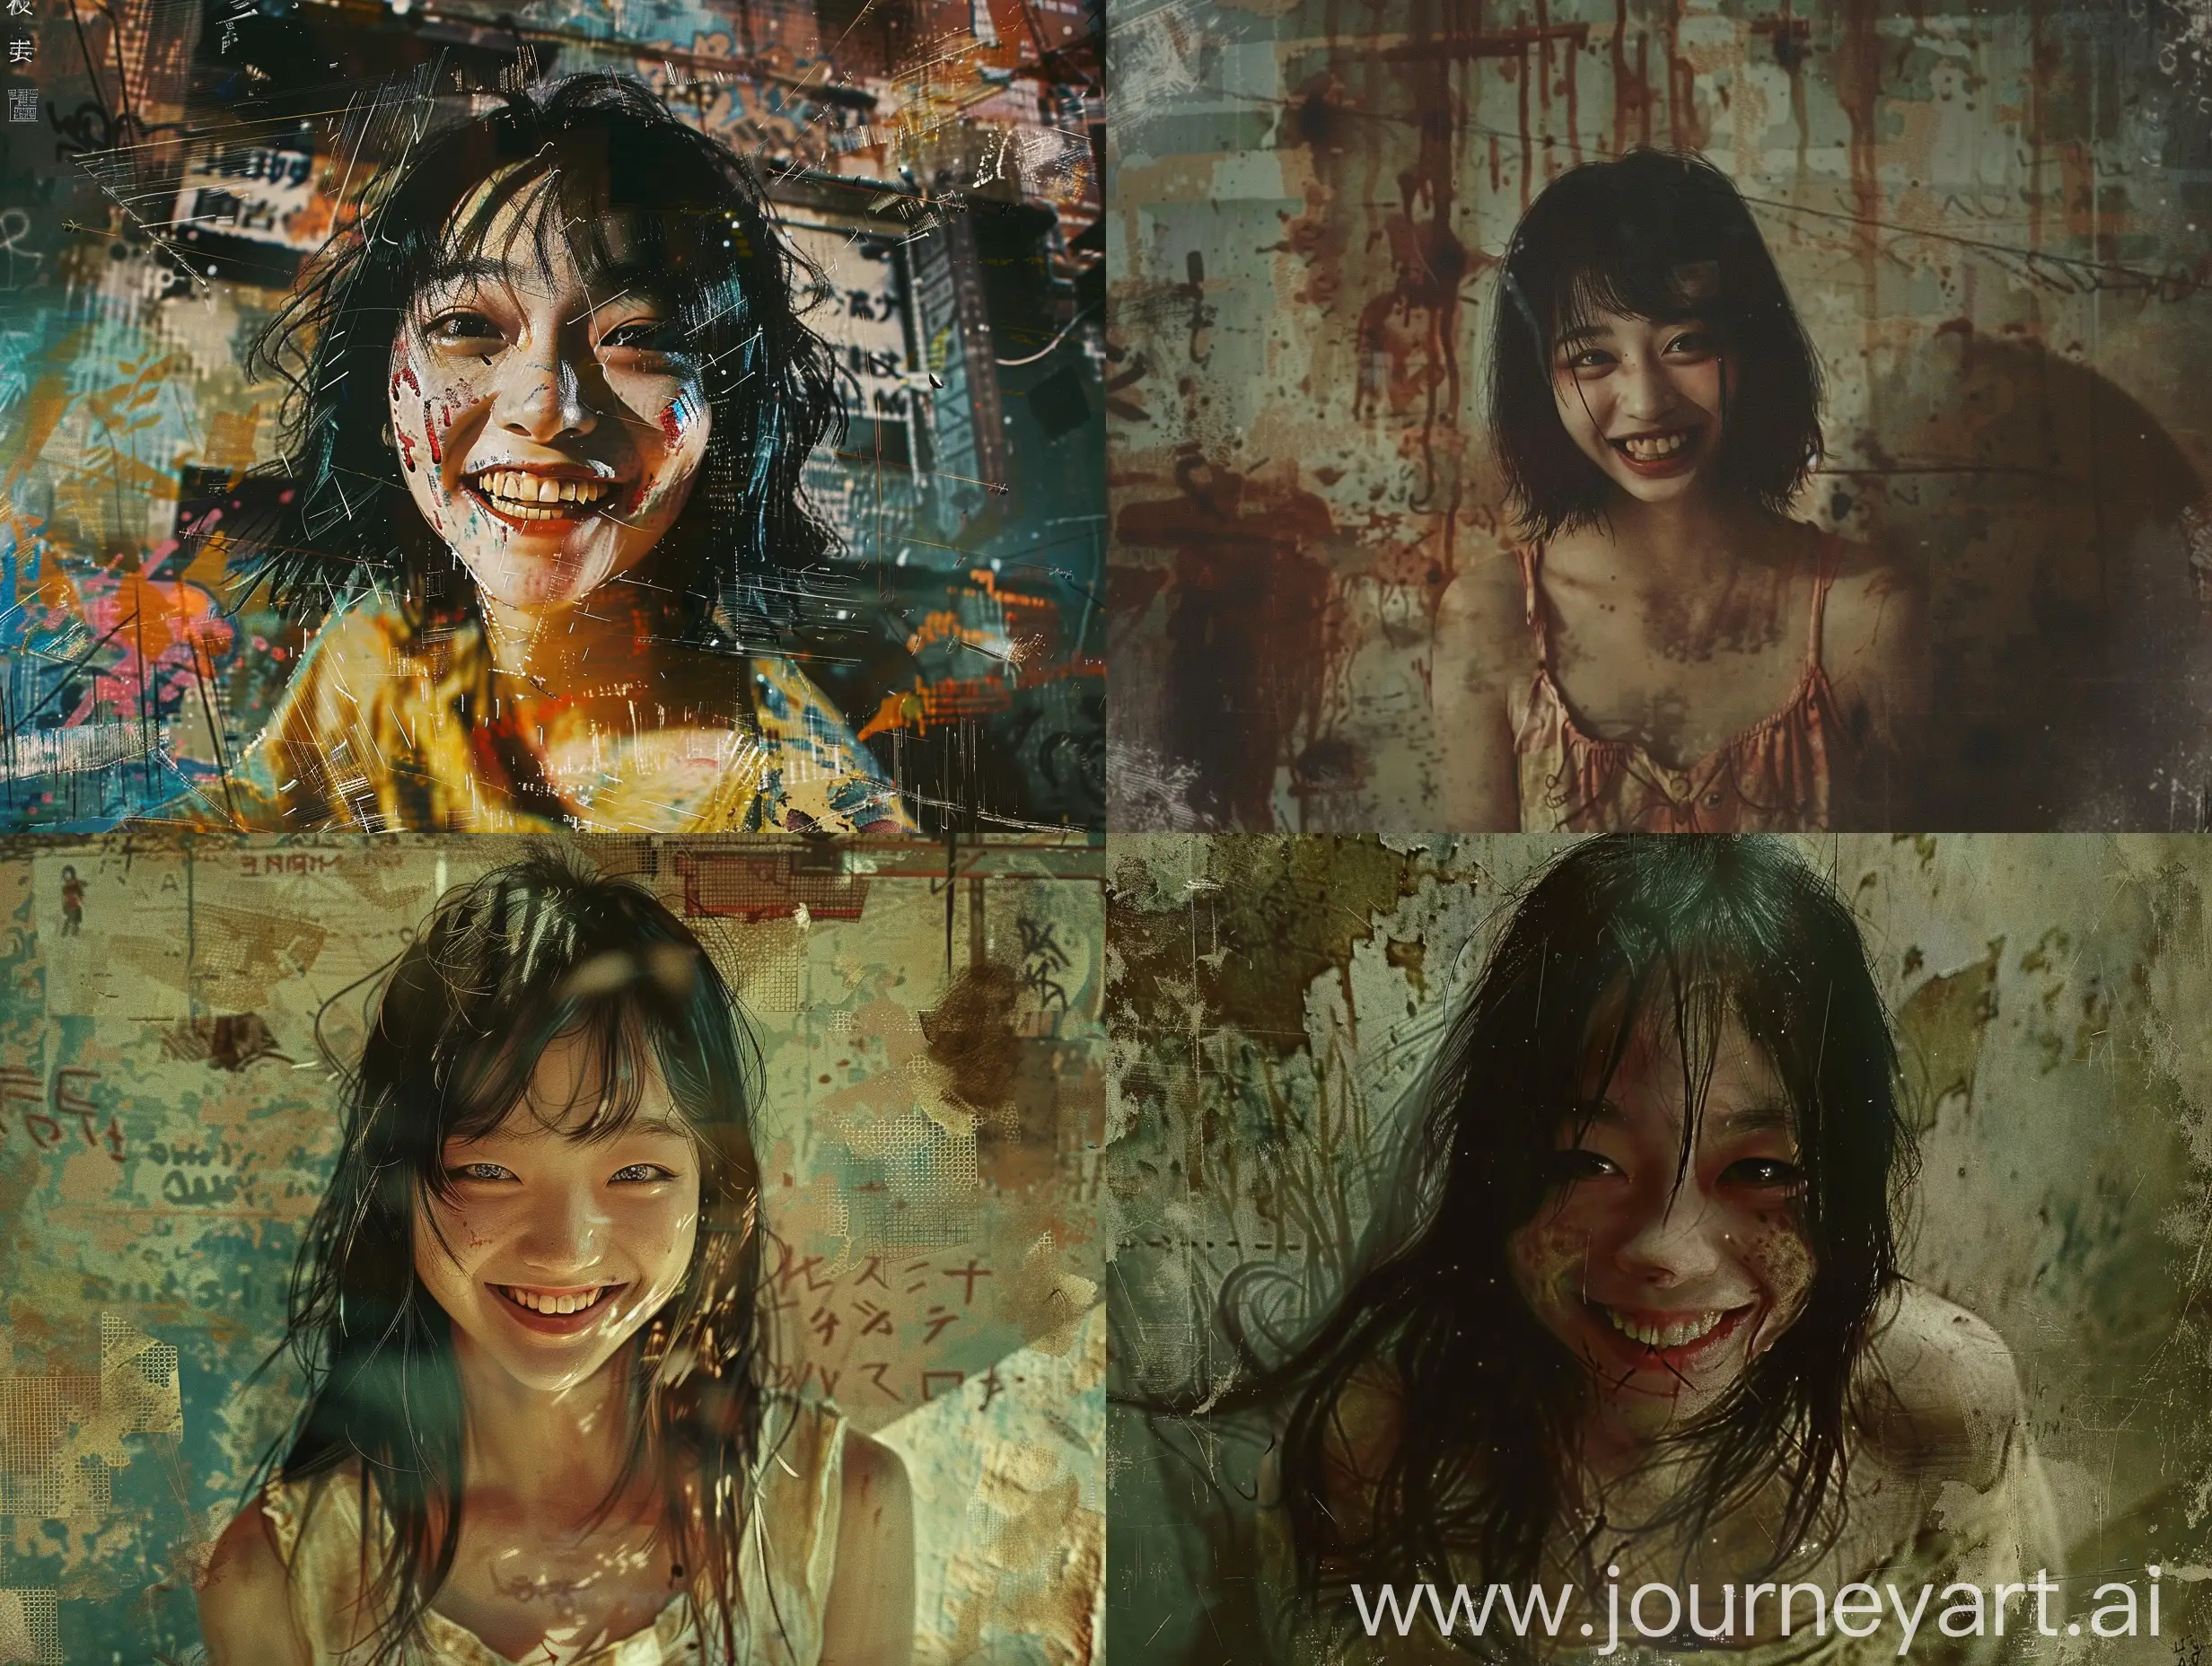 Japanese-Movie-Star-Smiling-in-Surreal-GraffitiFilled-Scene